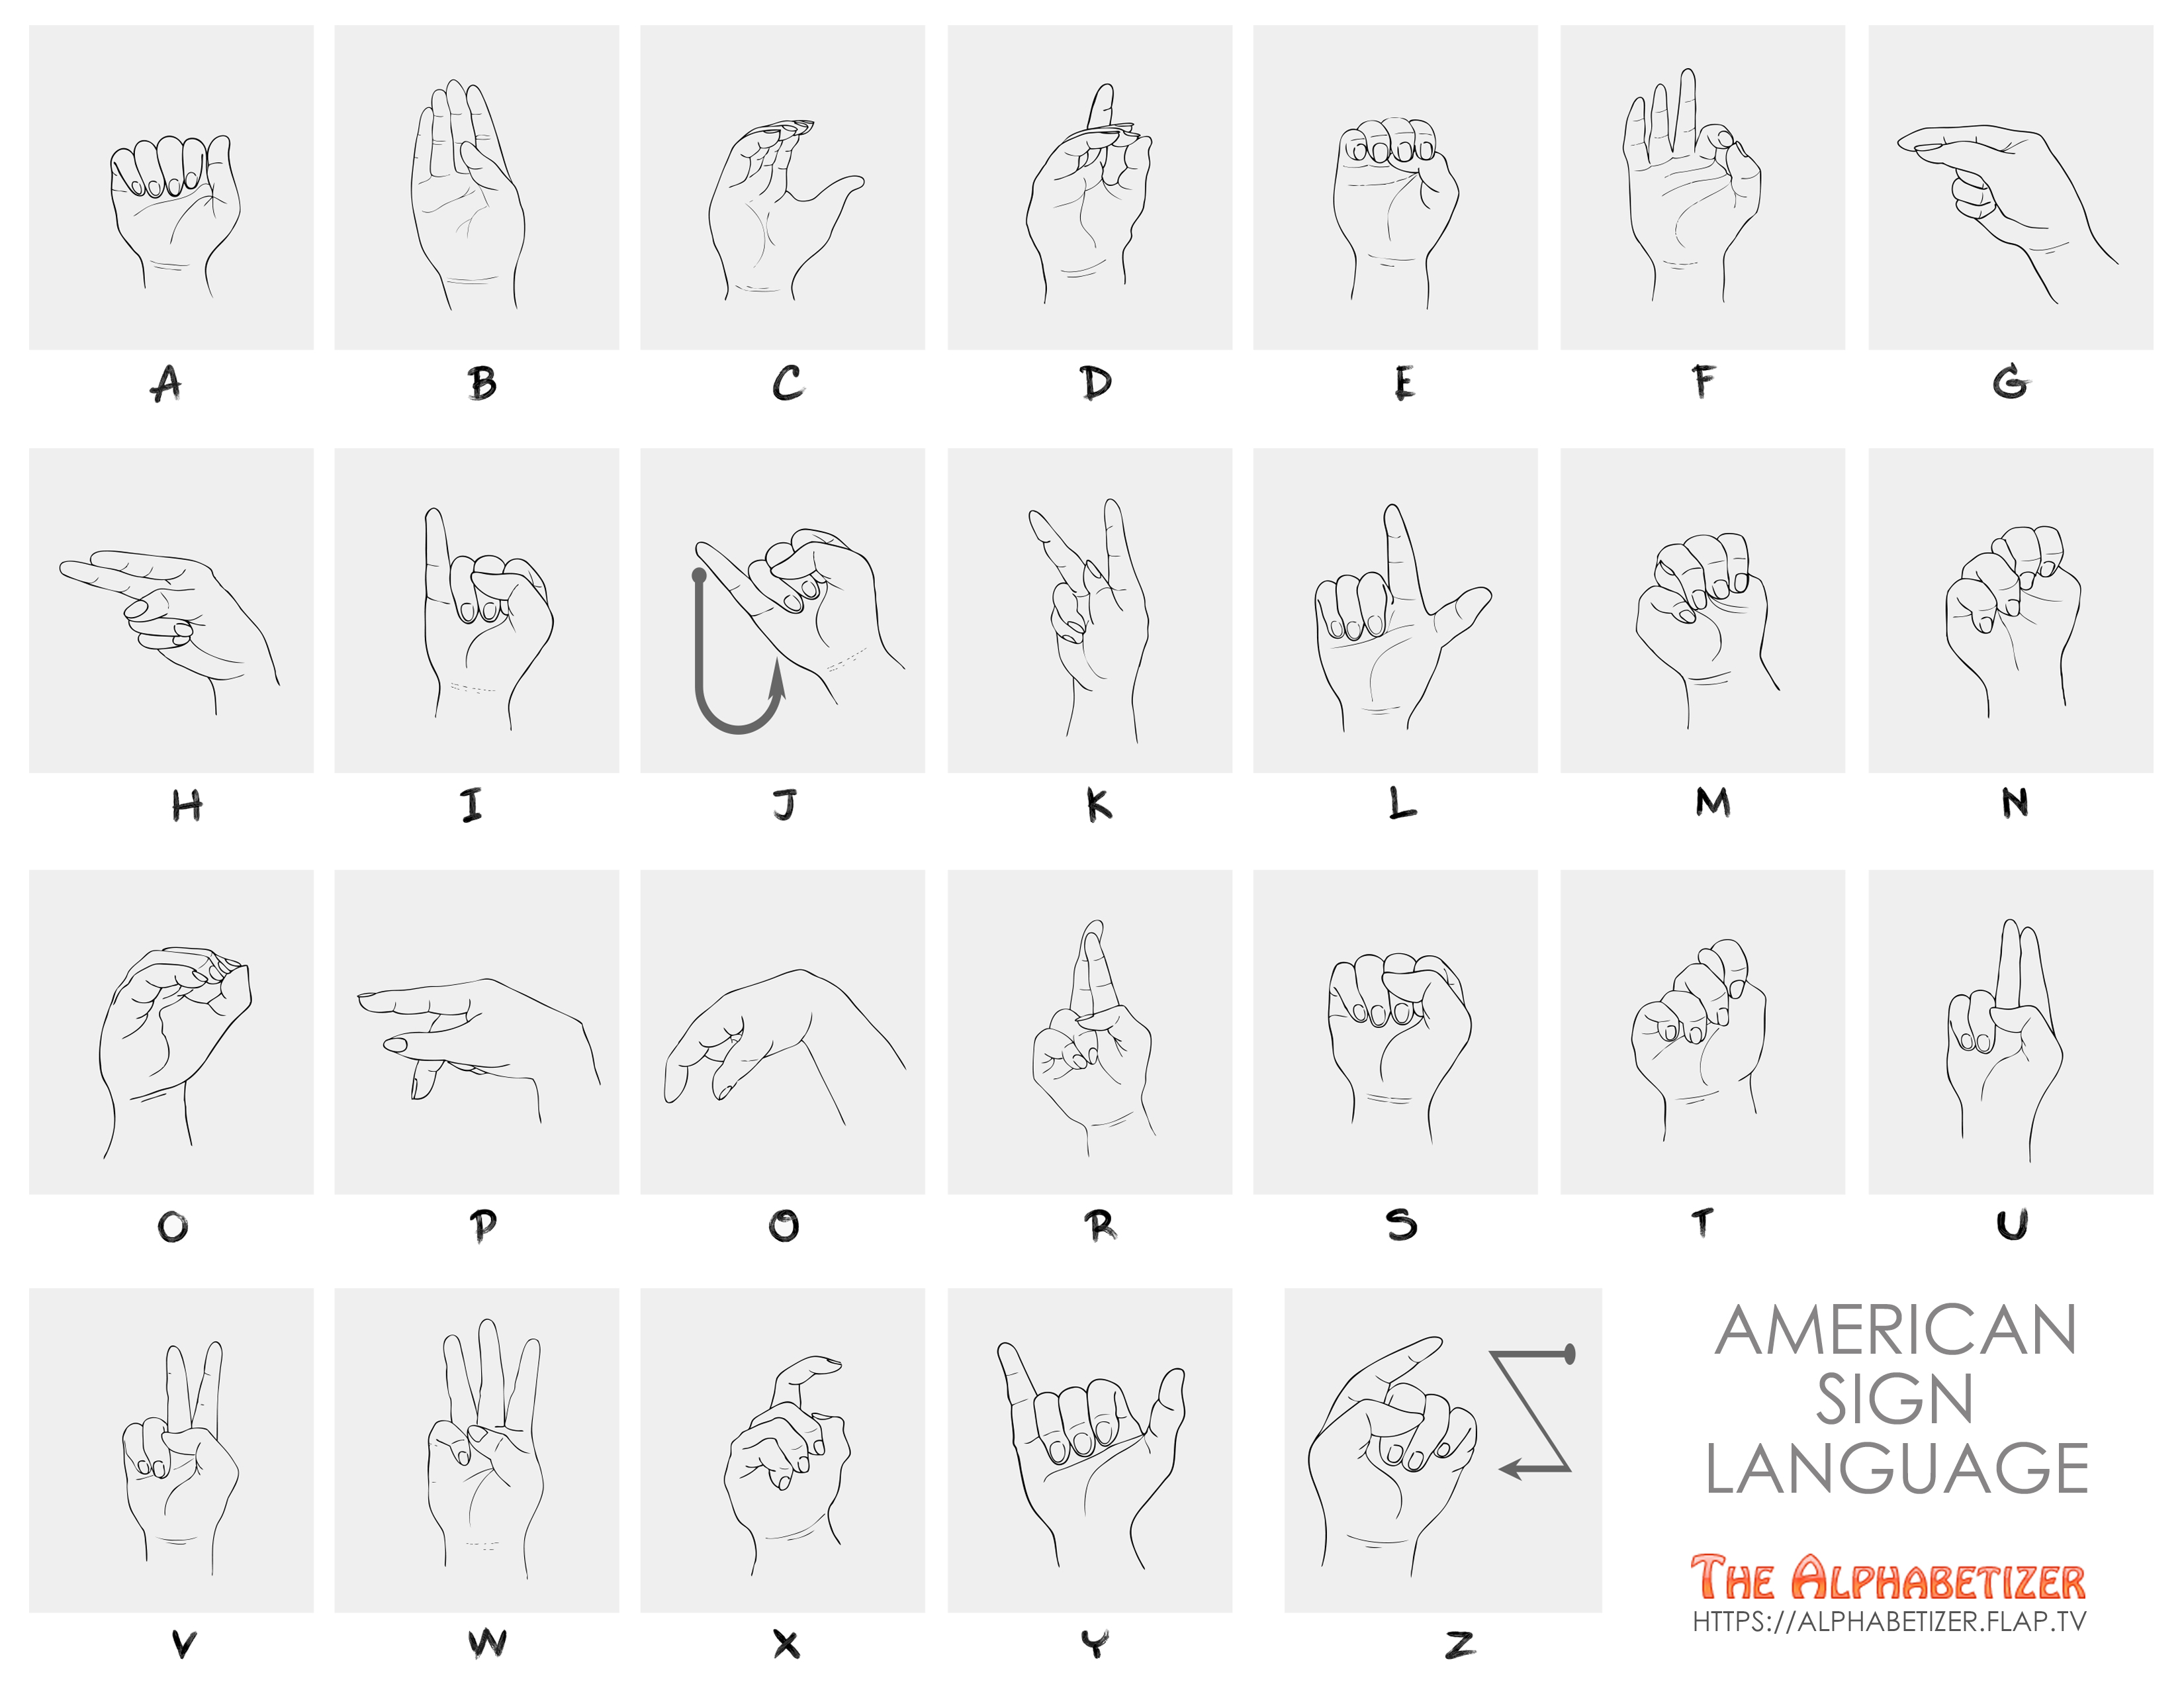 american sign language alphabet in alphabetical order